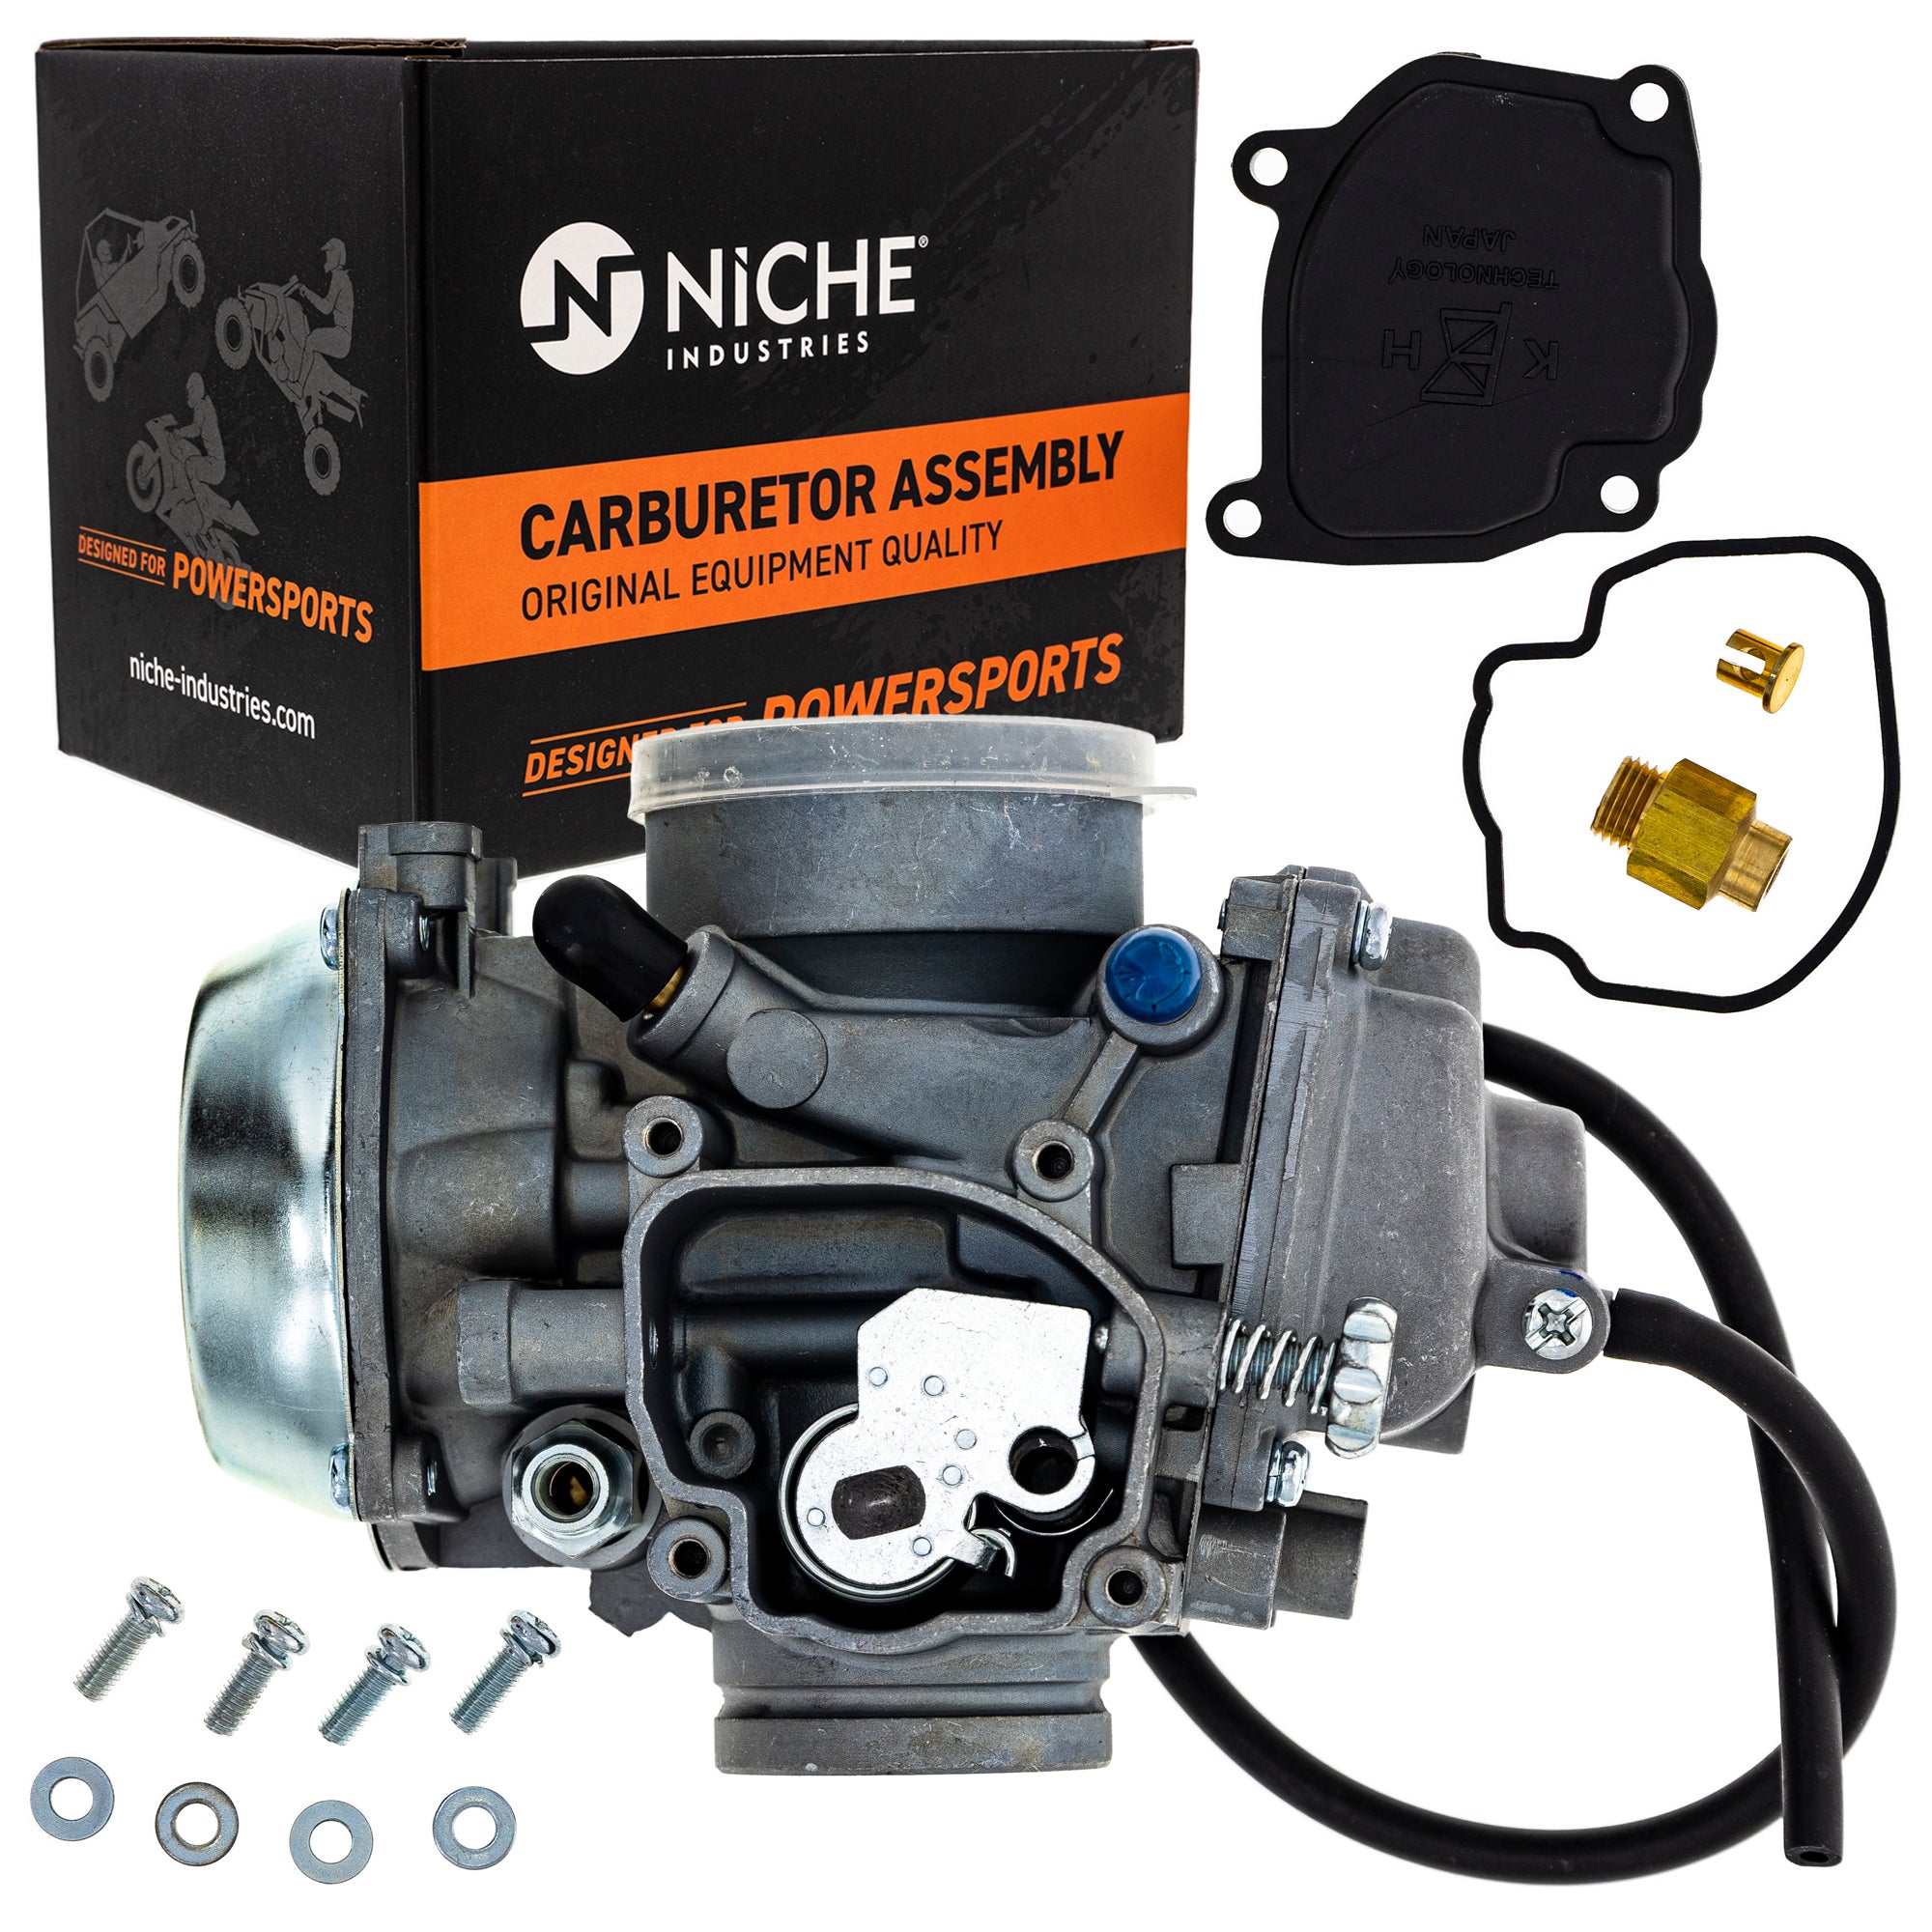 NICHE 519-KCR2295B Carburetor Assembly for Polaris Sportsman Ranger